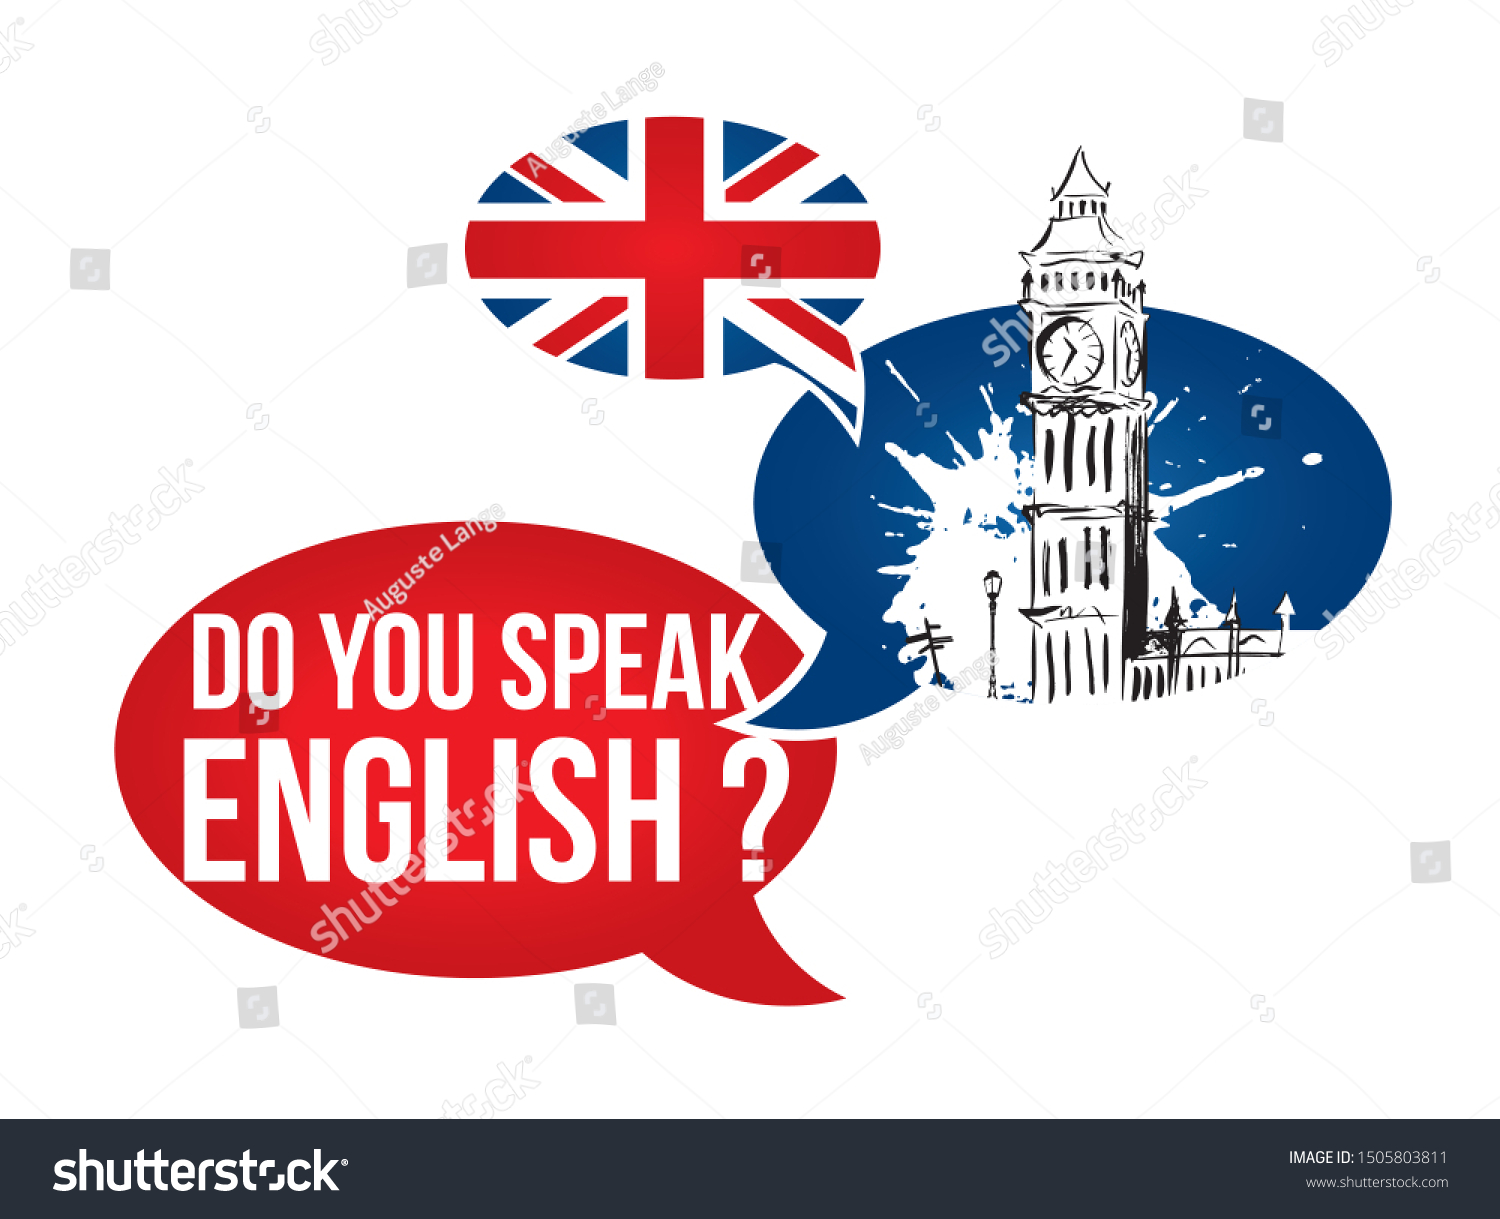 Do you speak english with me. Английский язык логотип. Do you speak English картинки. Do you speak English надпись. Английский язык вектор.